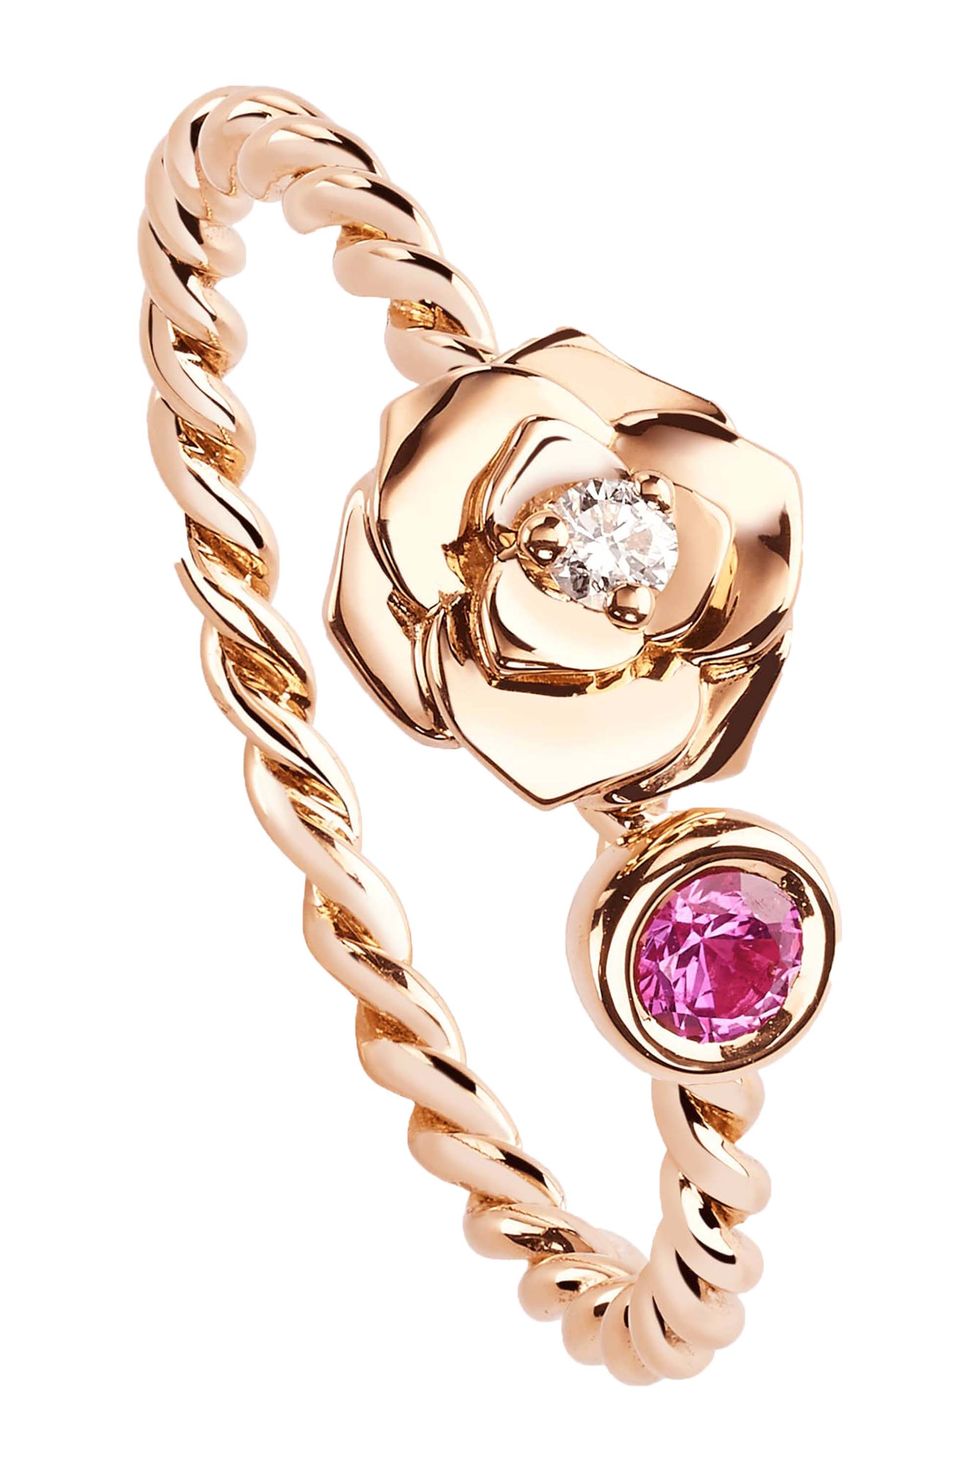 Jewellery, Fashion accessory, Analog watch, Body jewelry, Gemstone, Ring, Chain, Diamond, Crystal, Engagement ring, 